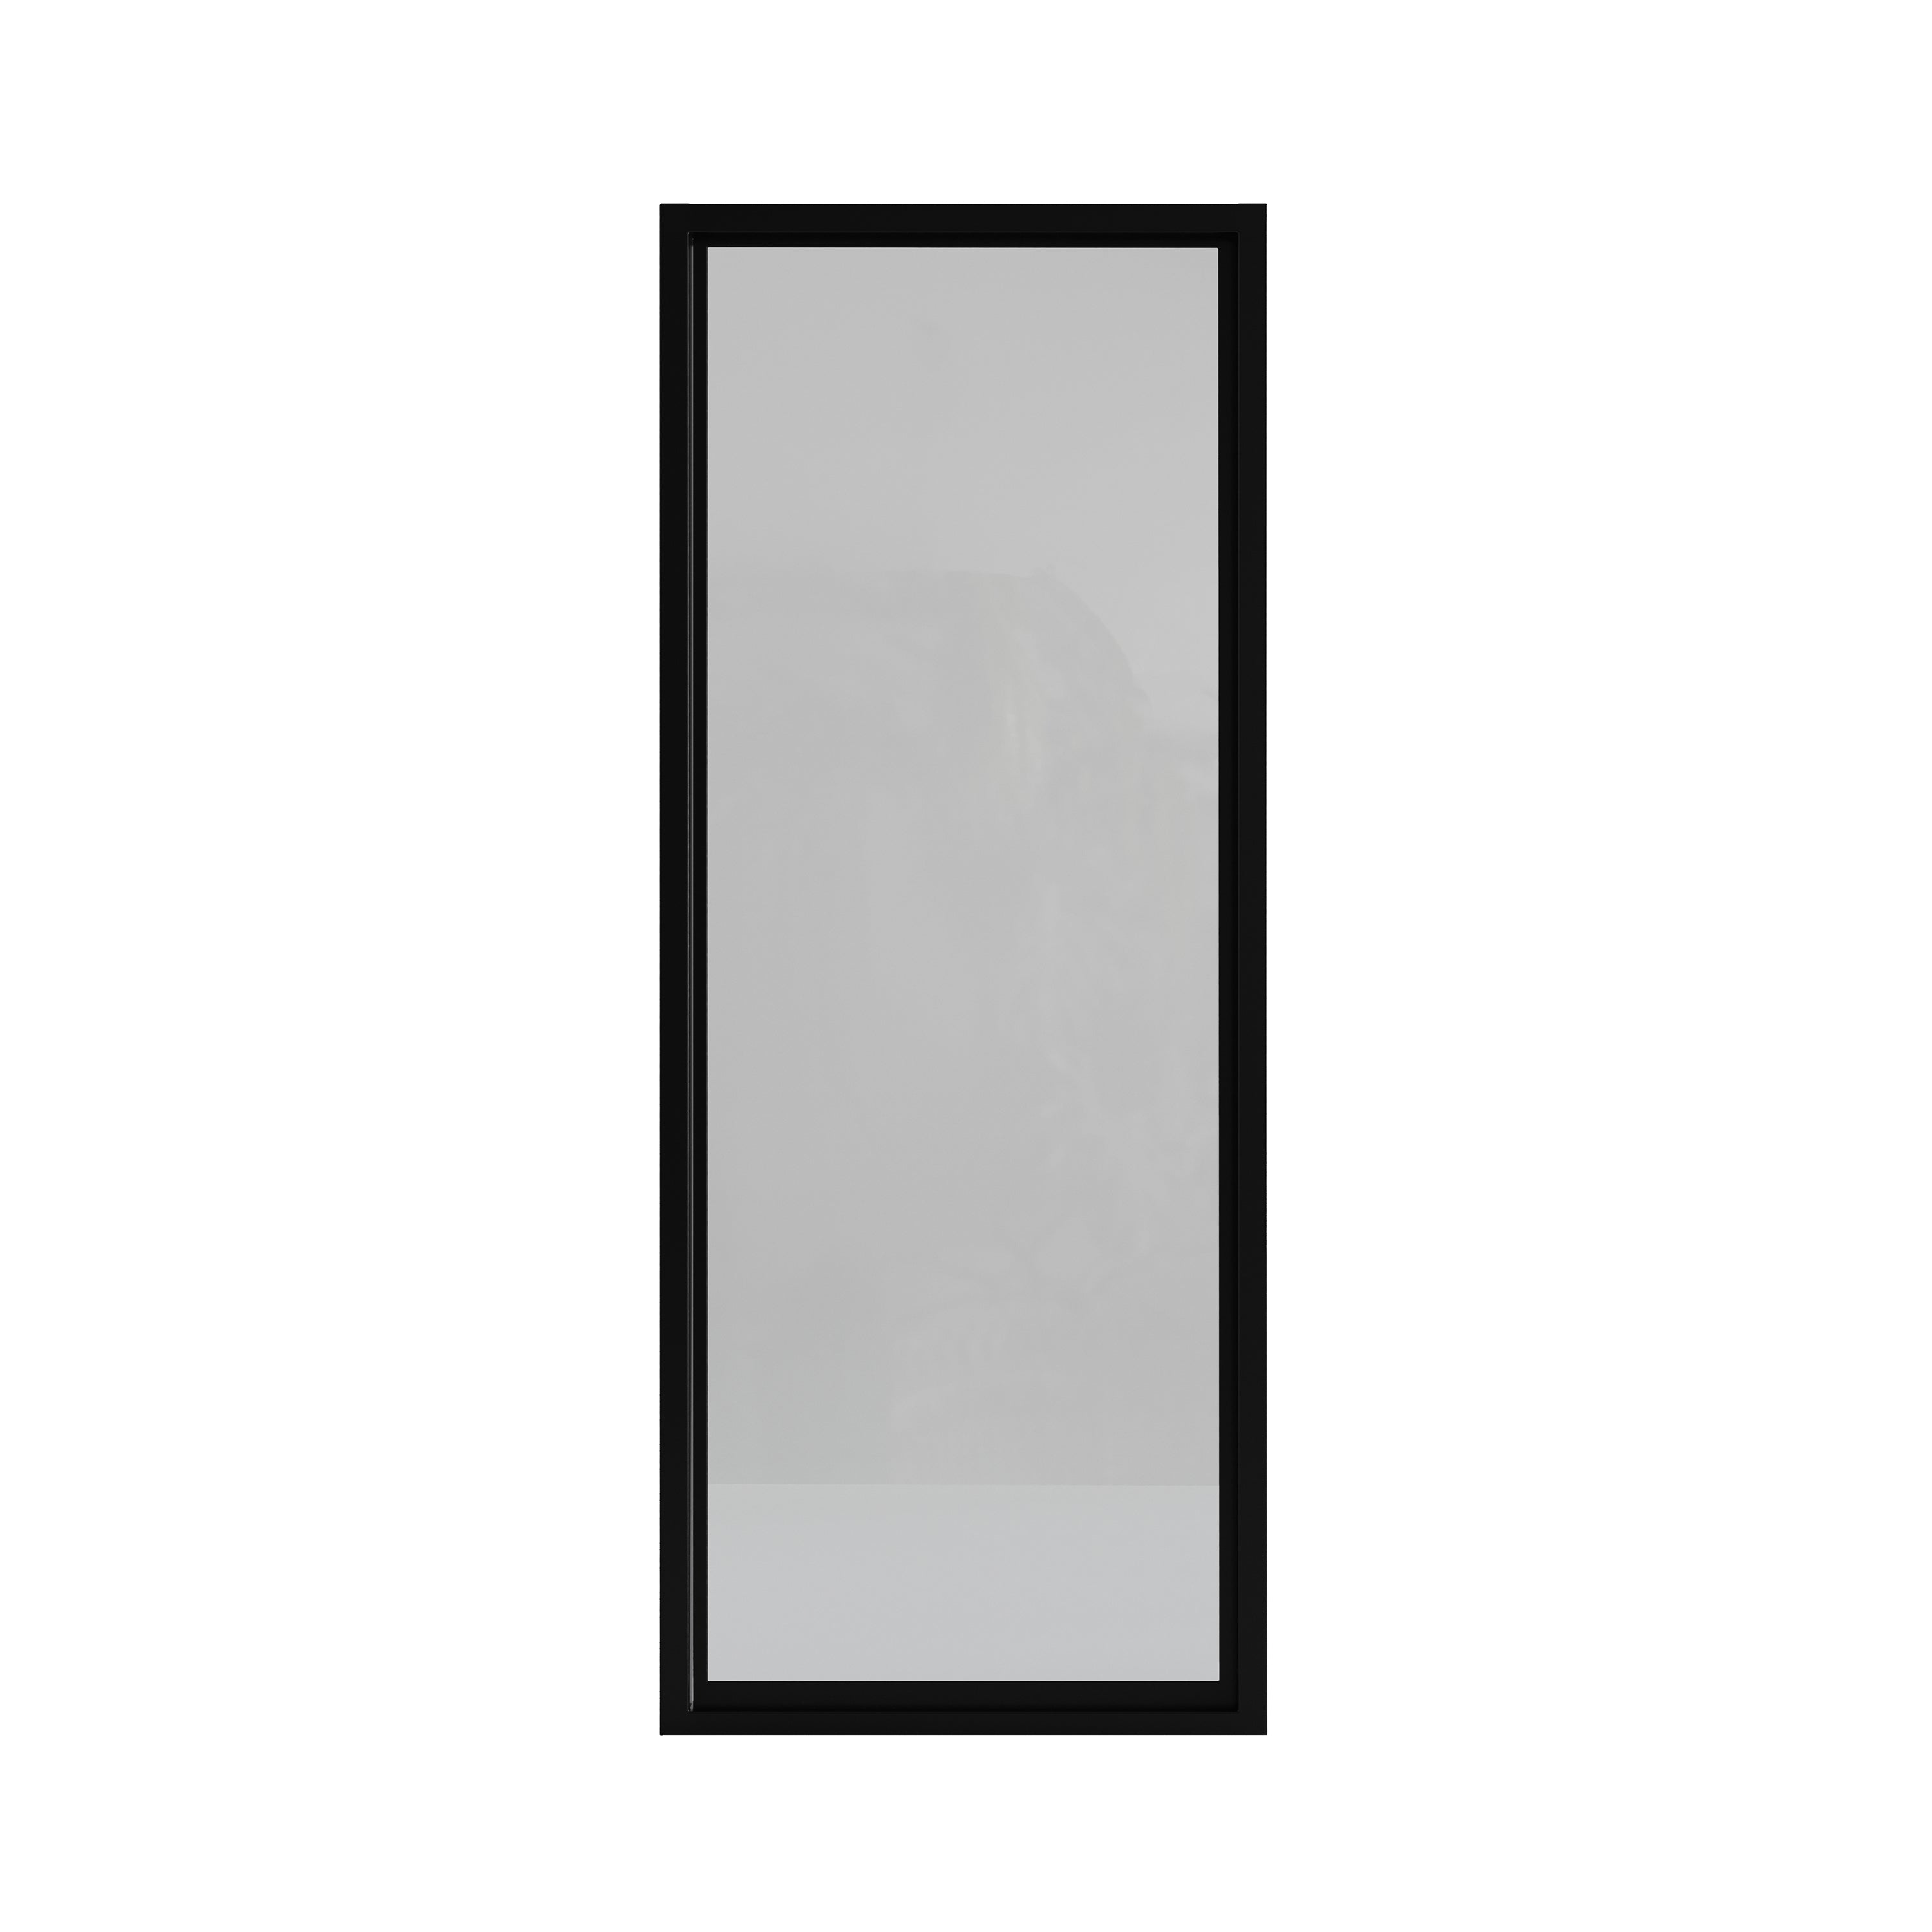 Fixed Glass Window Panel - Aluminum Metal Frame